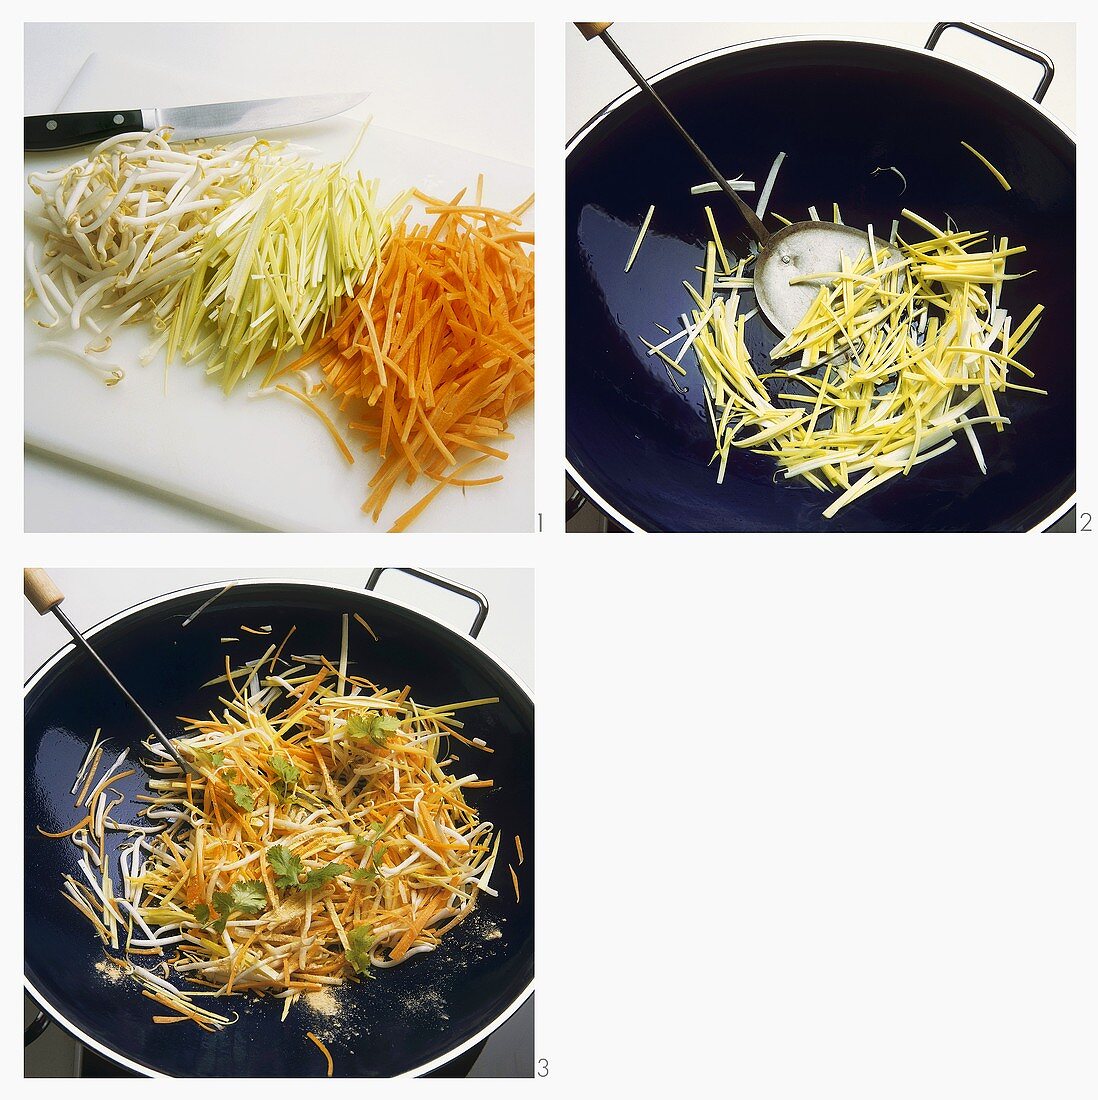 Stir-frying leeks, carrots and soya beans